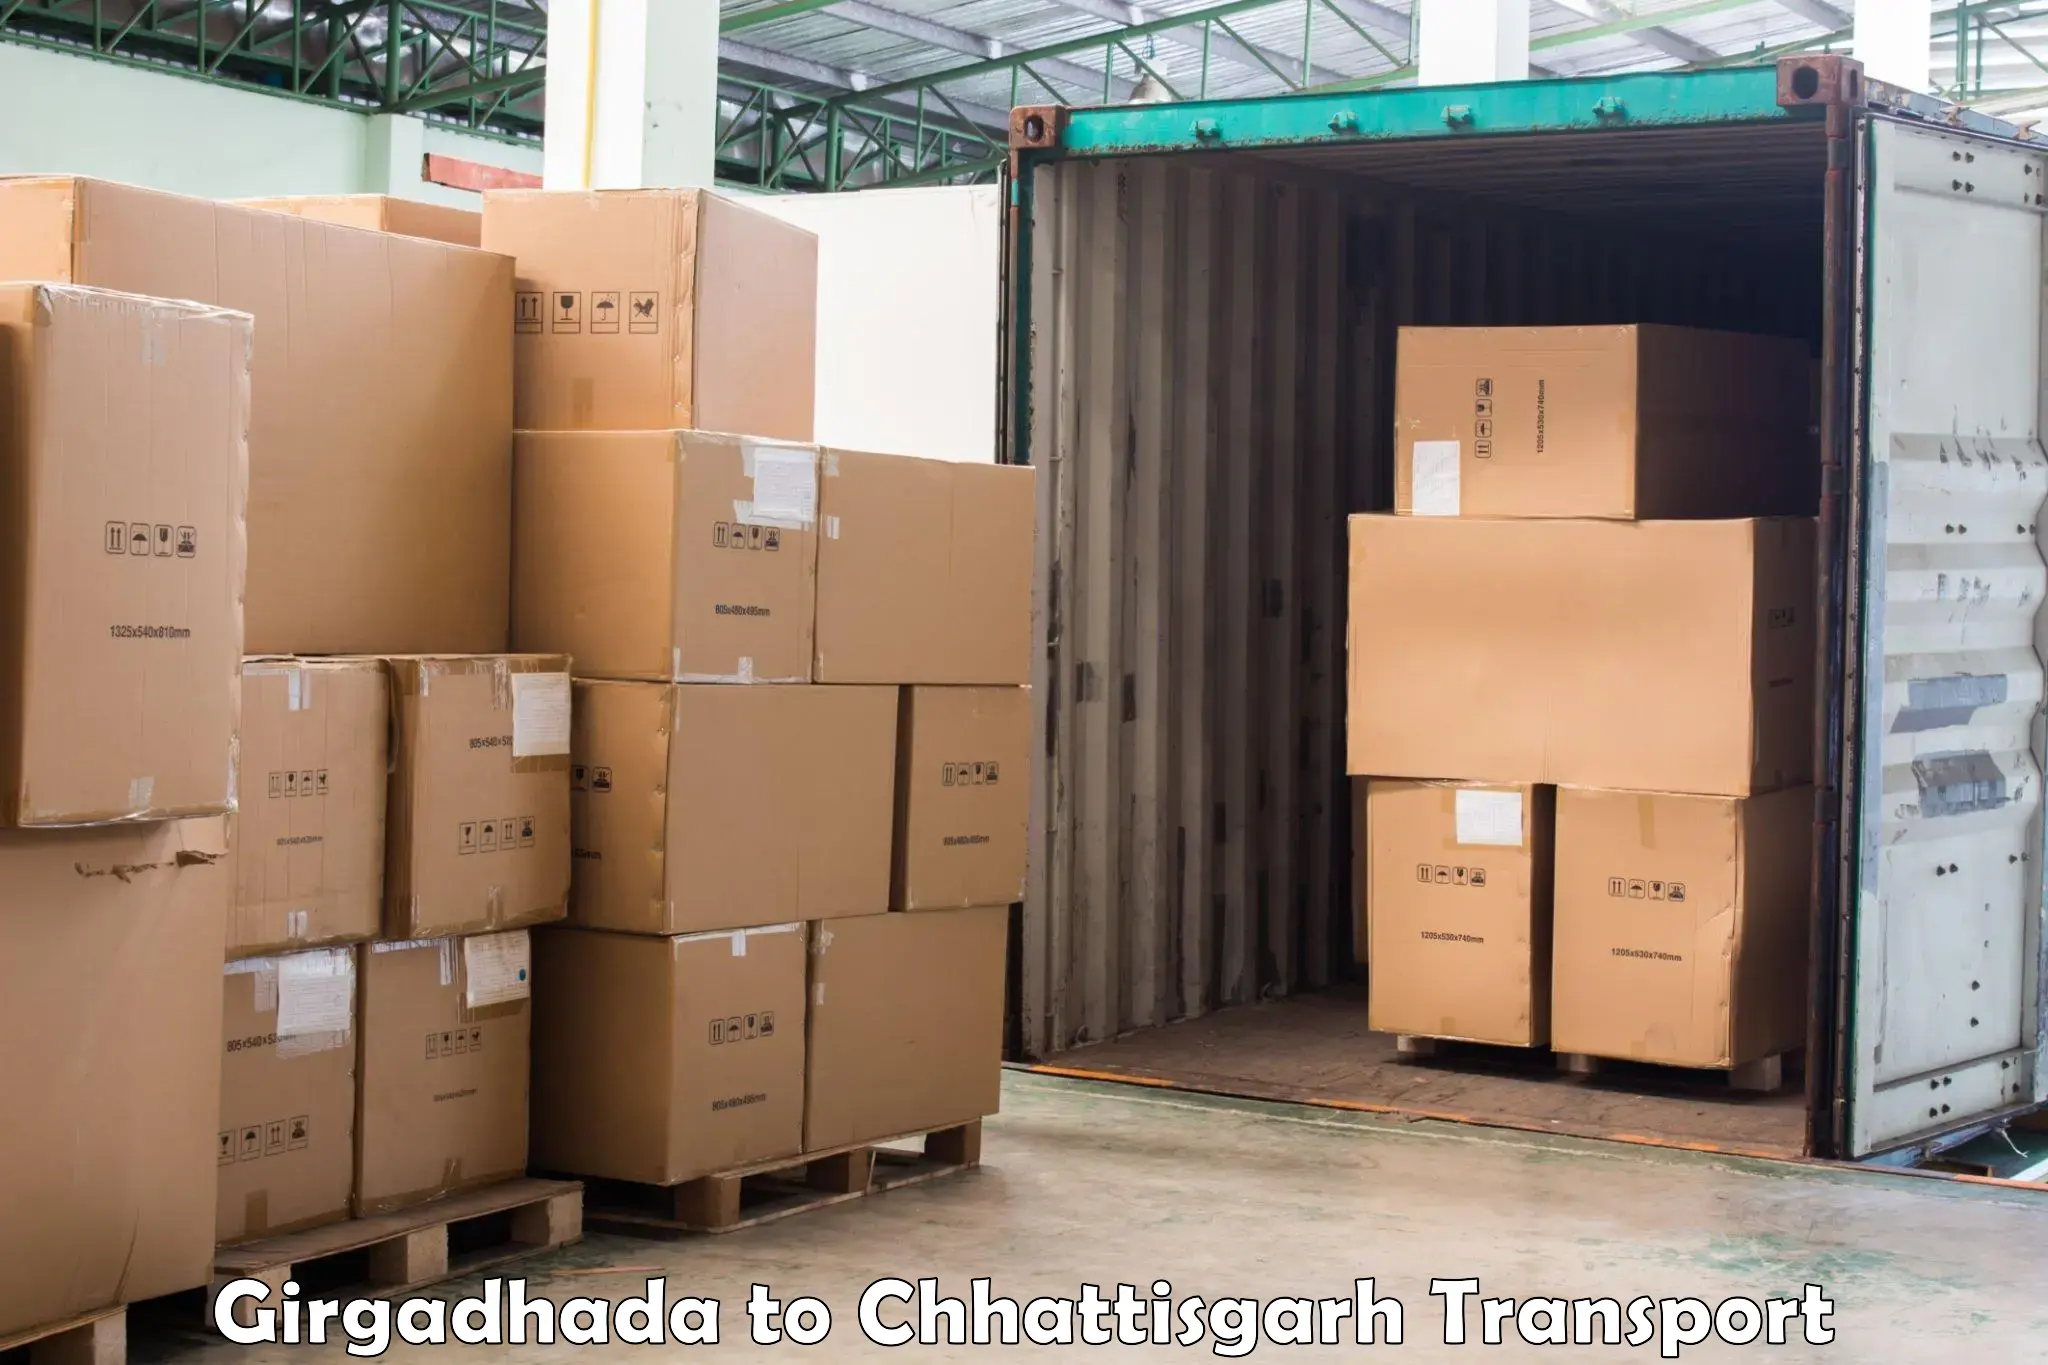 Truck transport companies in India in Girgadhada to Kharora